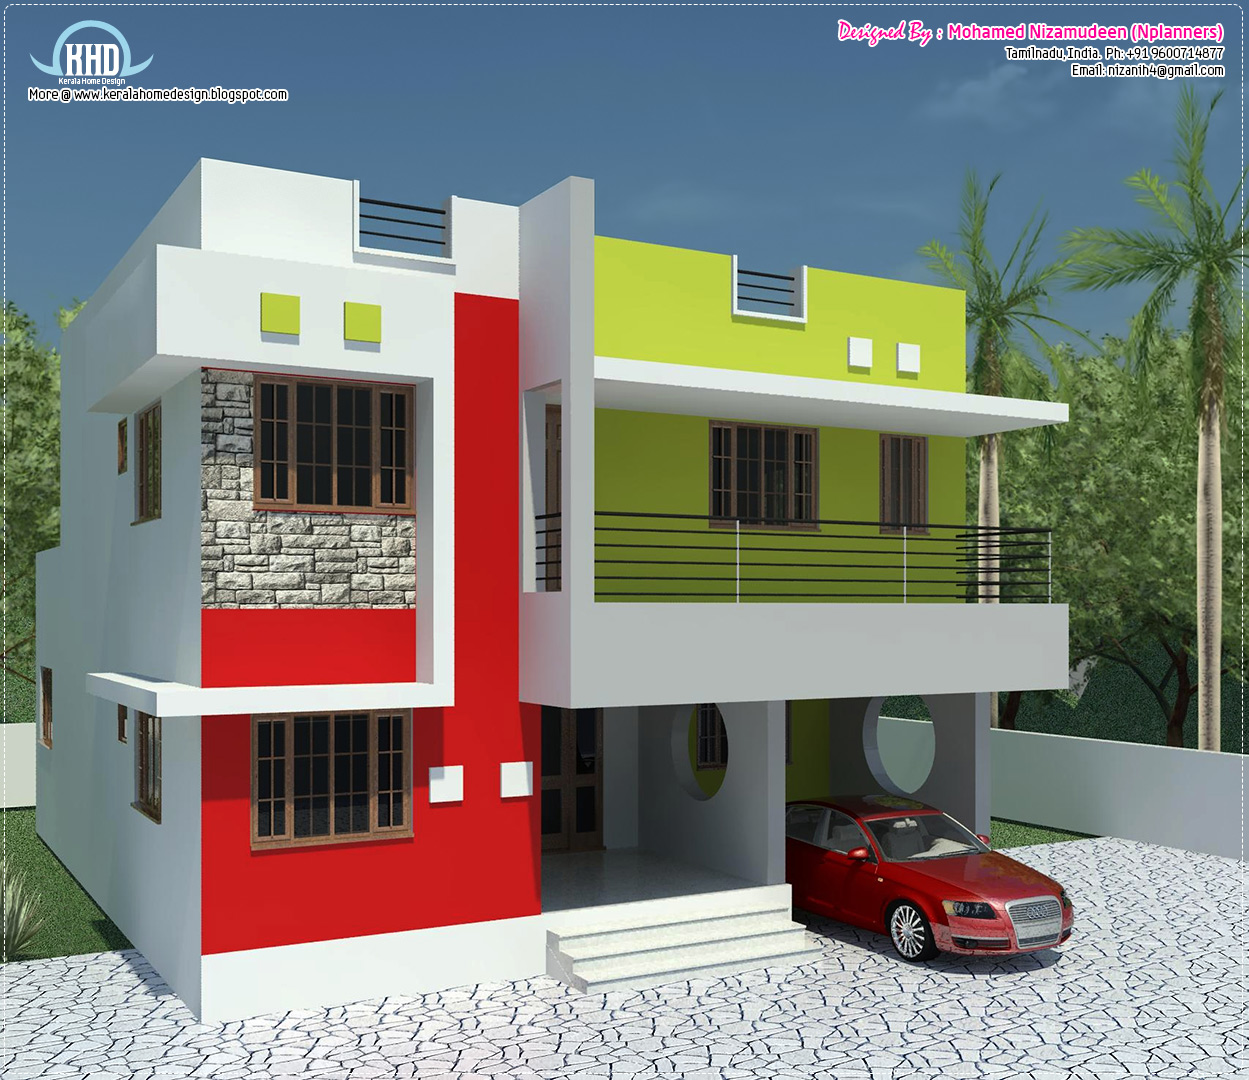 Design of 120 yards interior houses - Home design and style Design of 120 yards interior houses